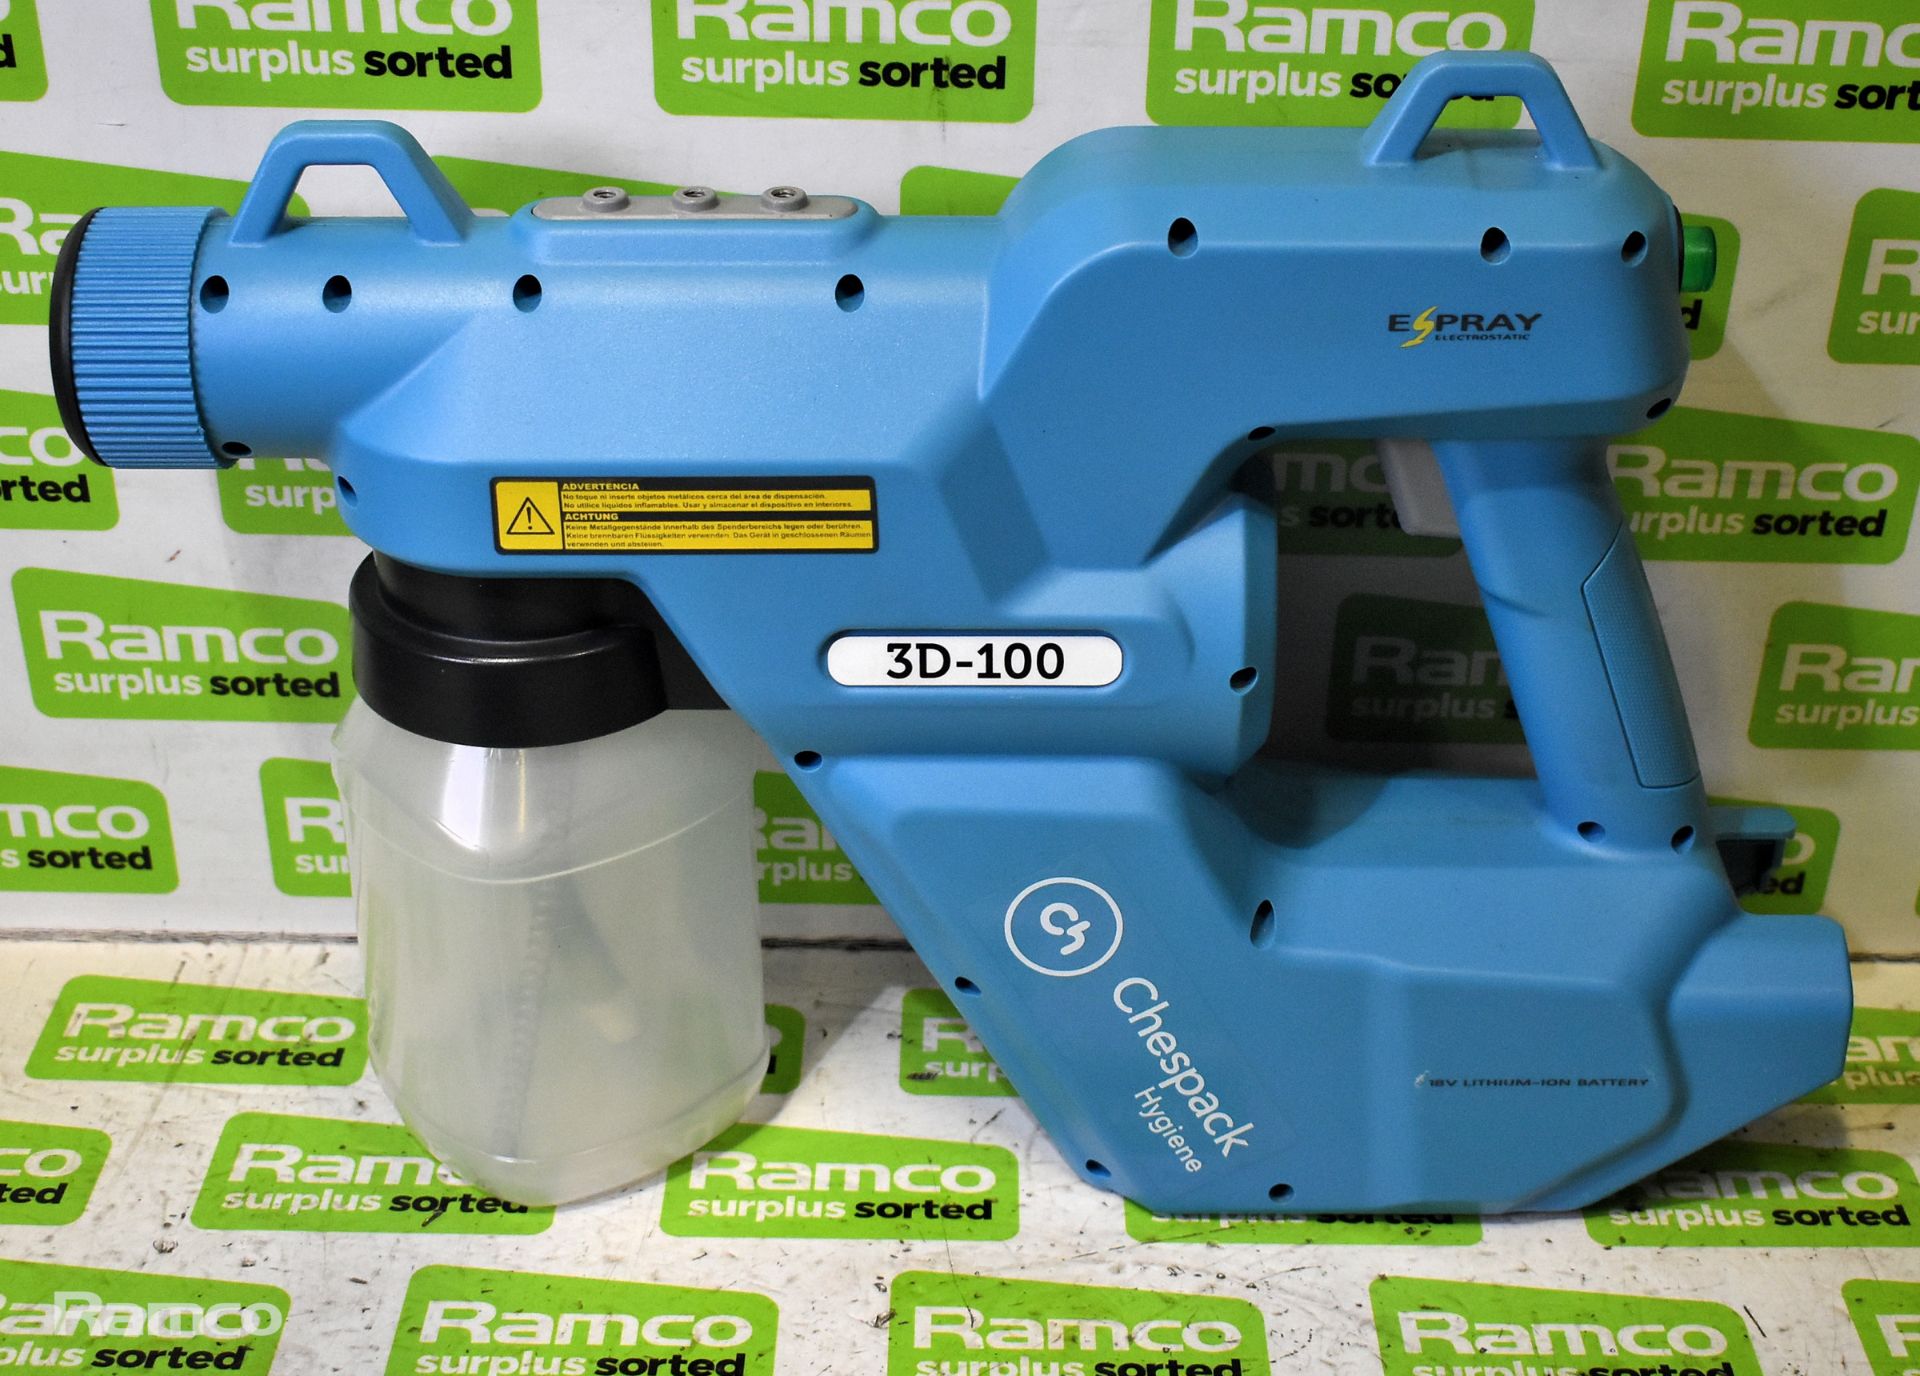 FIMAP E-Spray electrostatic hygienization industrial disinfection gun spray kit - Image 6 of 8